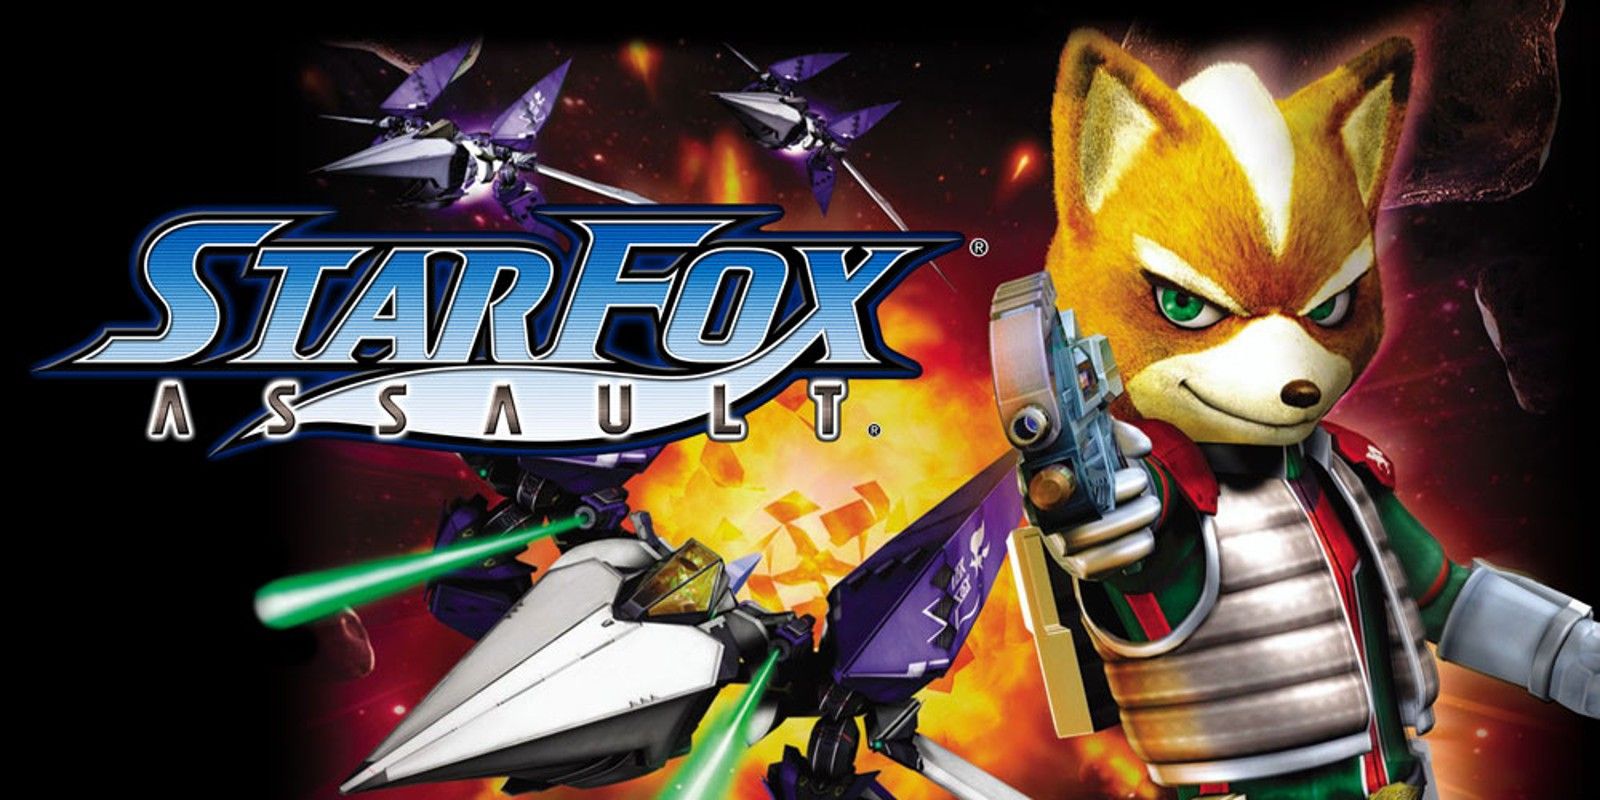 Fox McCloud aiming his blaster in Star Fox: Assault cover art